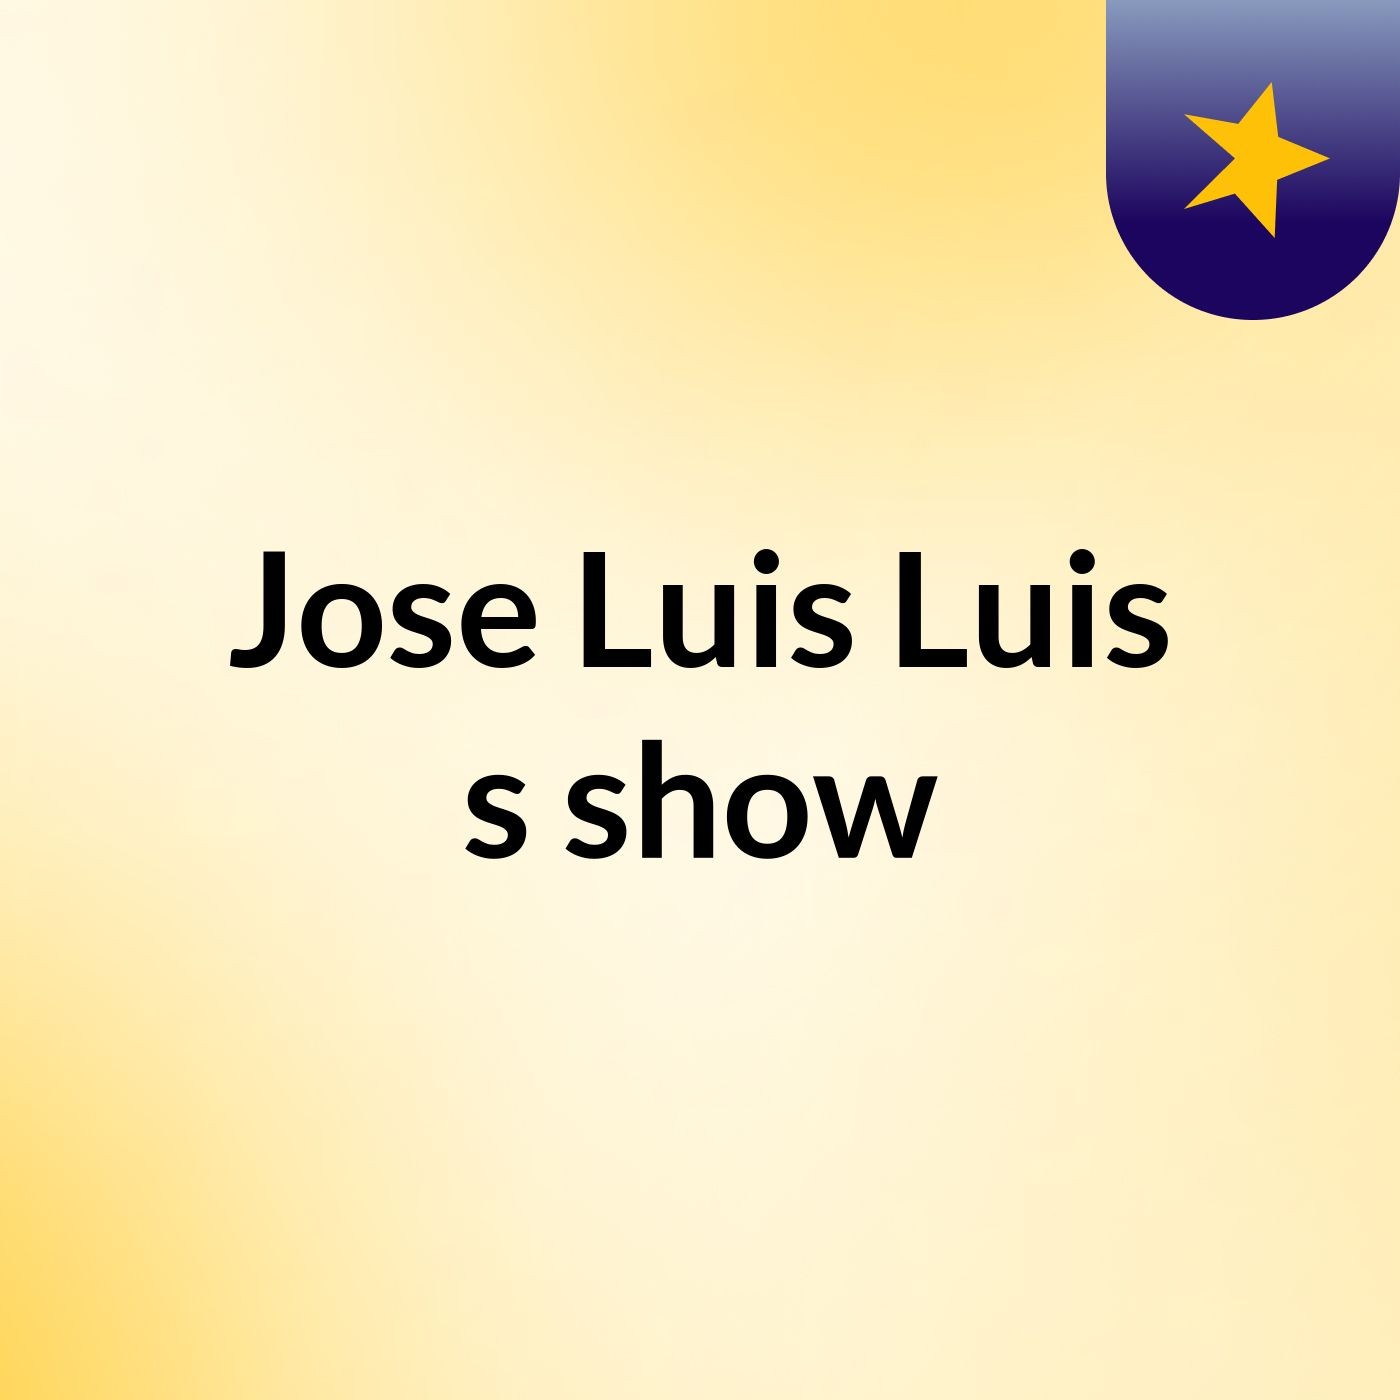 Jose Luis Luis's show